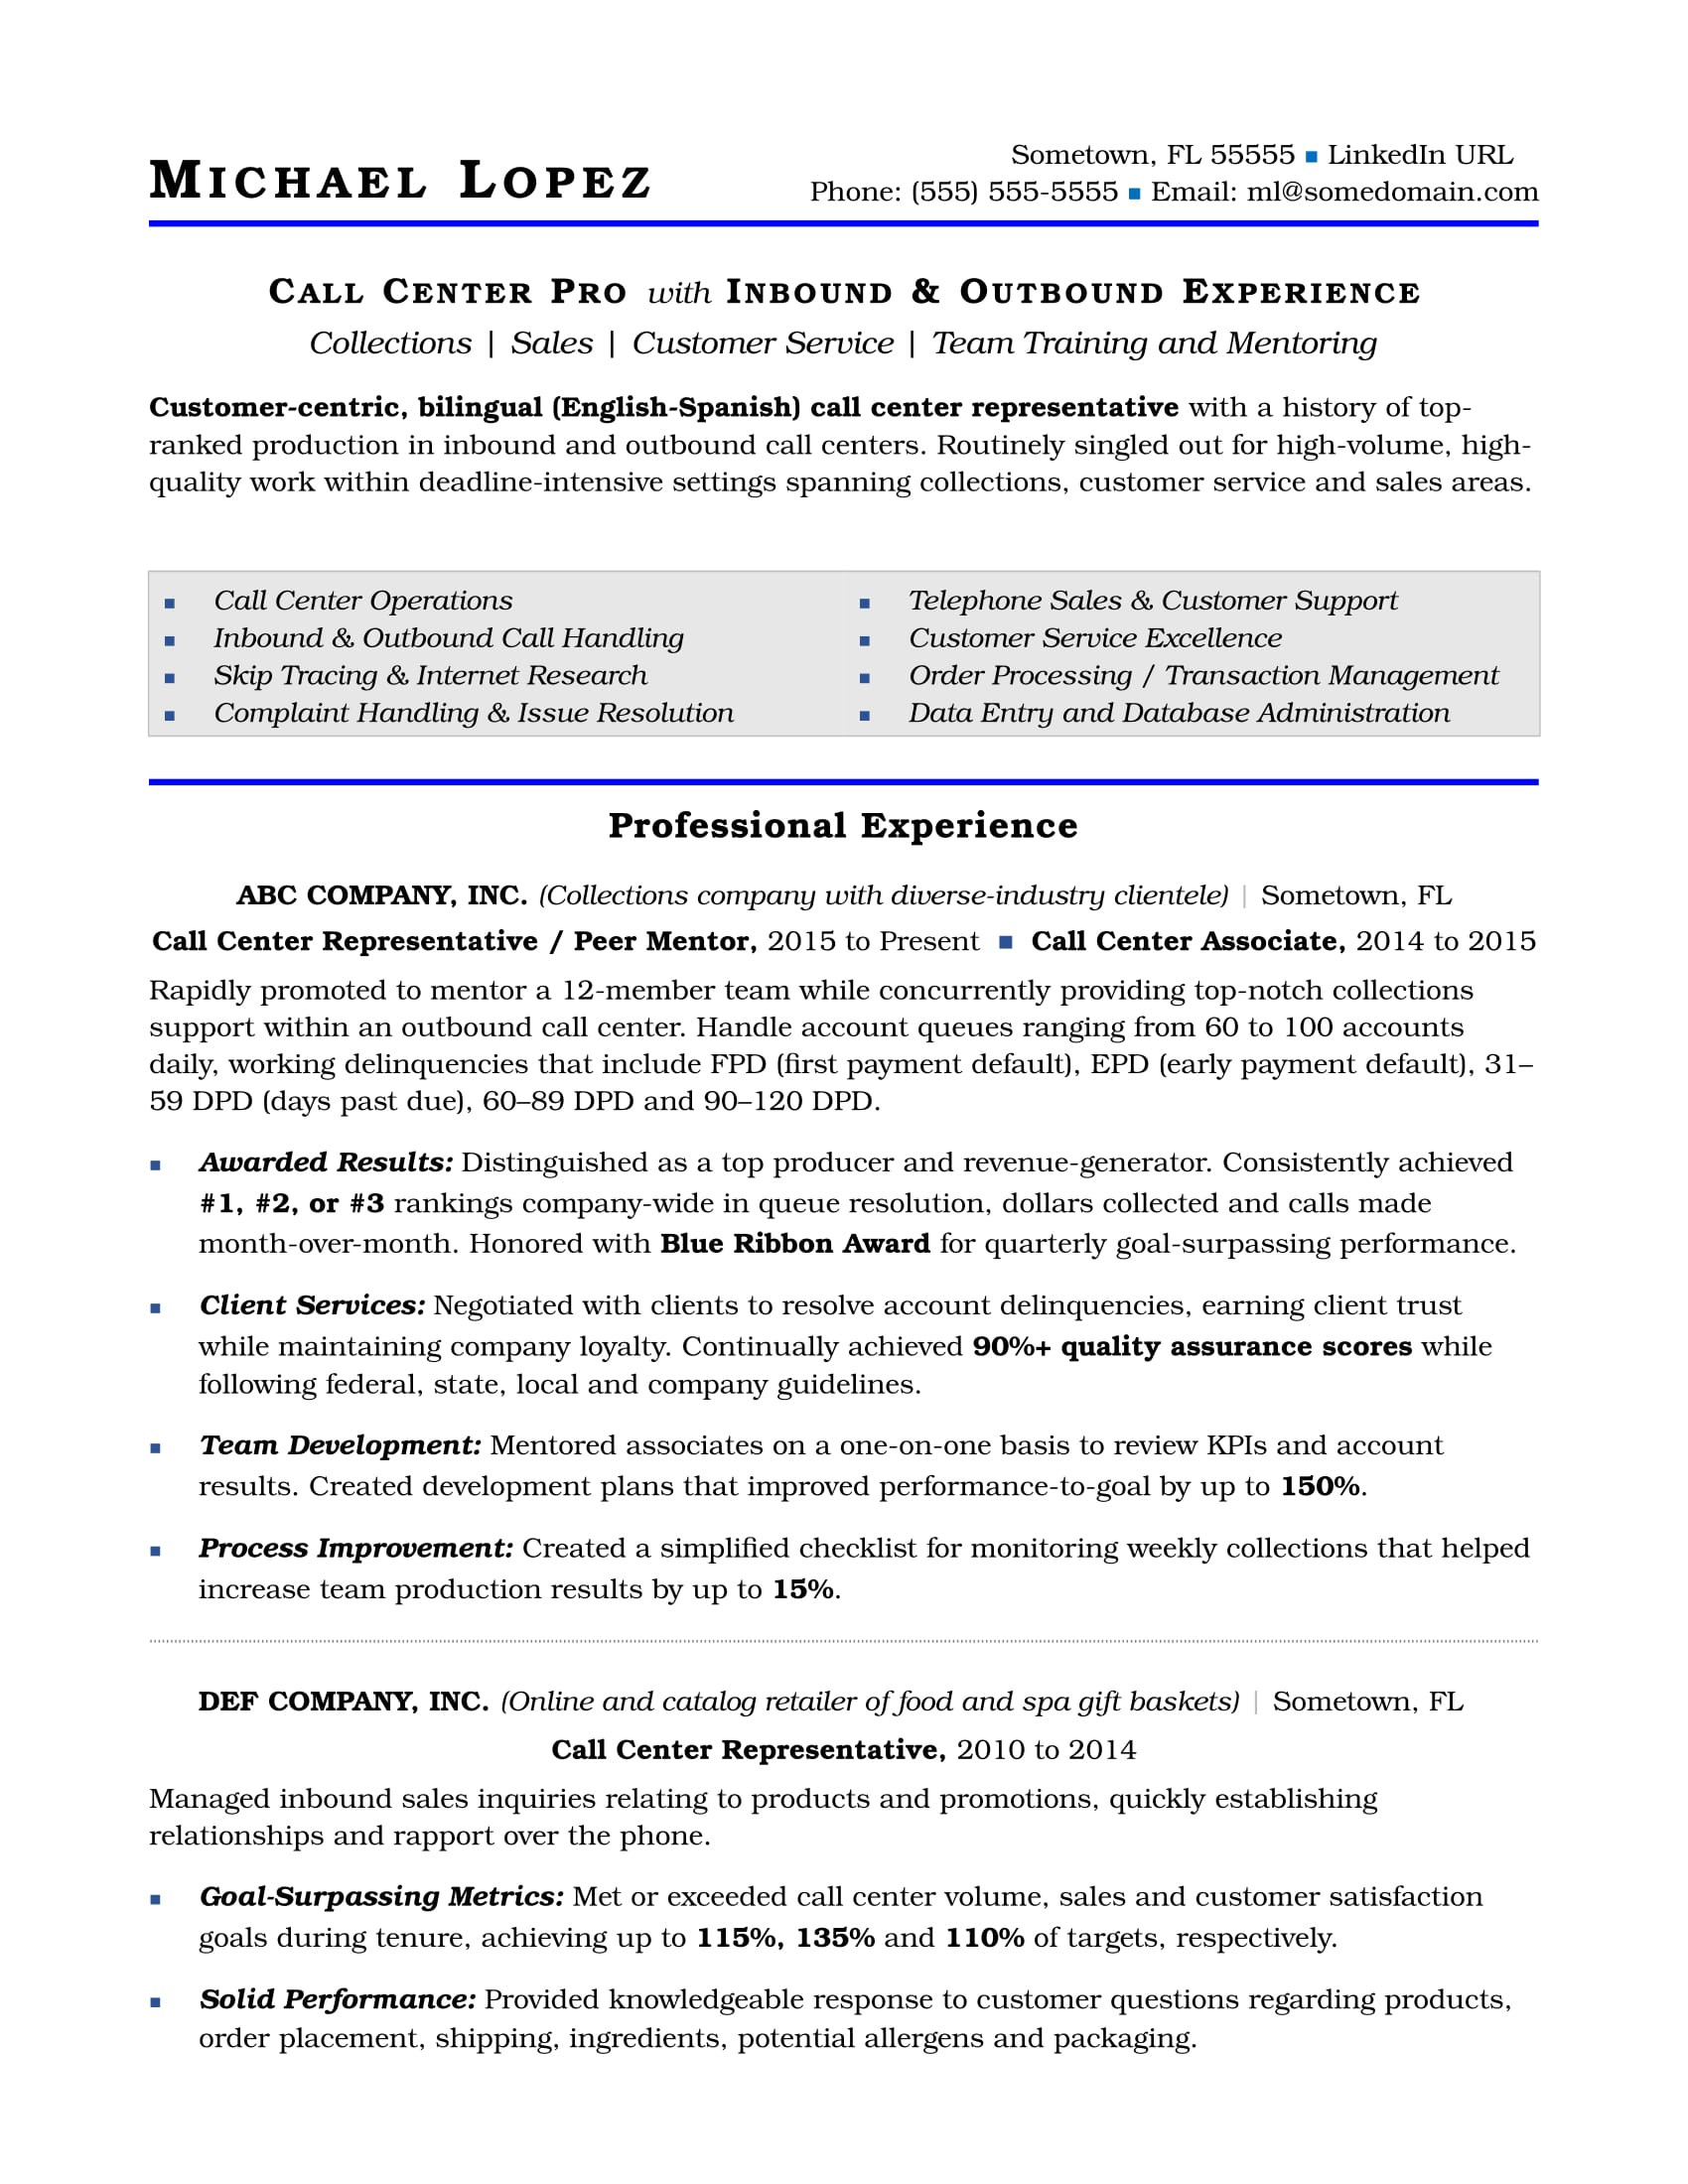 Customer Service Call Center Resume Templates Call Center Resume Sample Monster.com